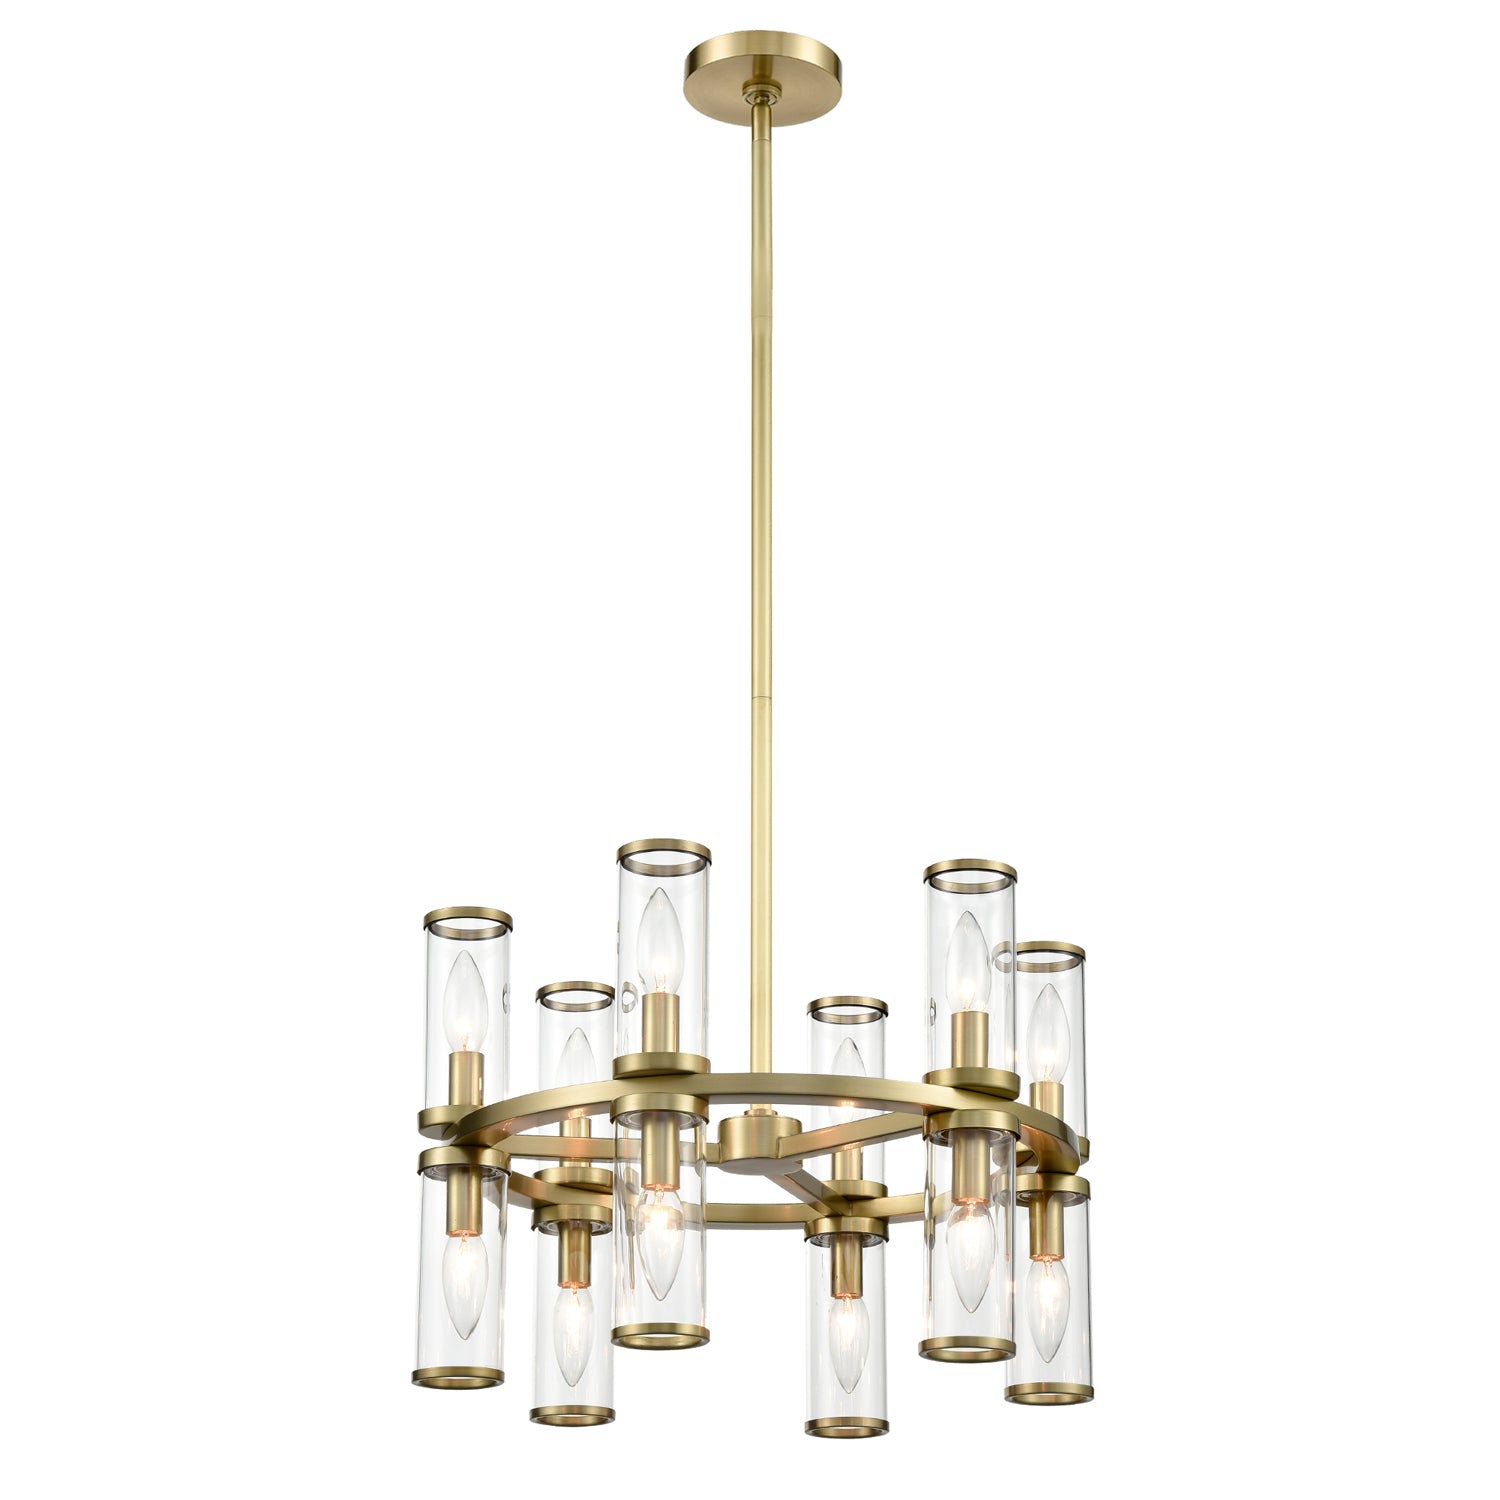 Alora revolve CH309066NBCG Chandelier Light - Clear Glass/Natural Brass